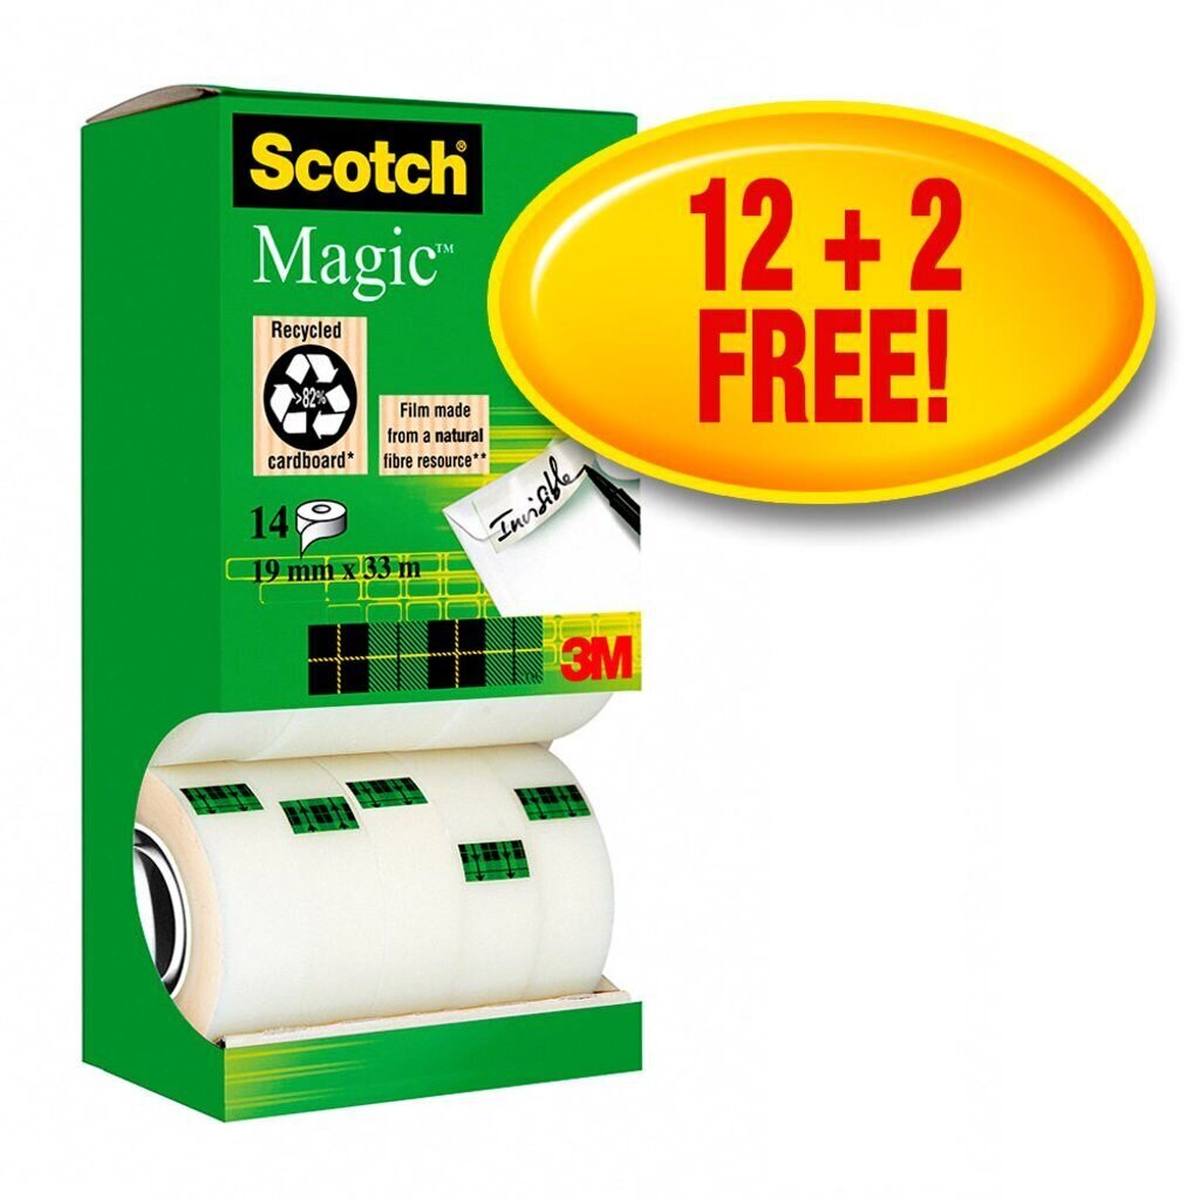 3M Scotch Magic plakband promotie met 14 rollen 19 mm x 33 m